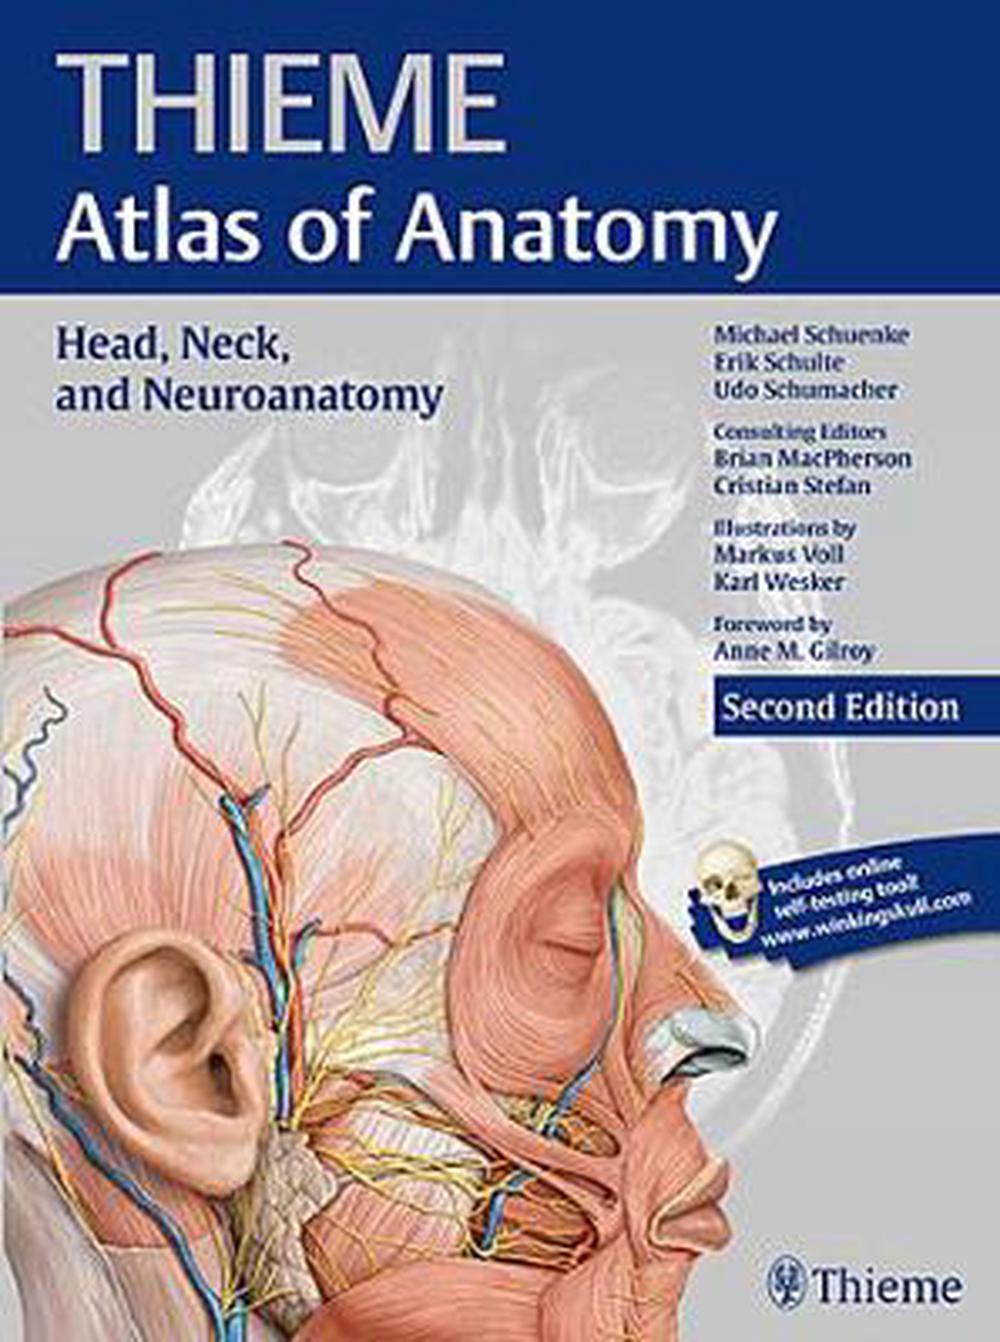 Head, Neck, and Neuroanatomy (Thieme Atlas of Anatomy), 2nd Edition by